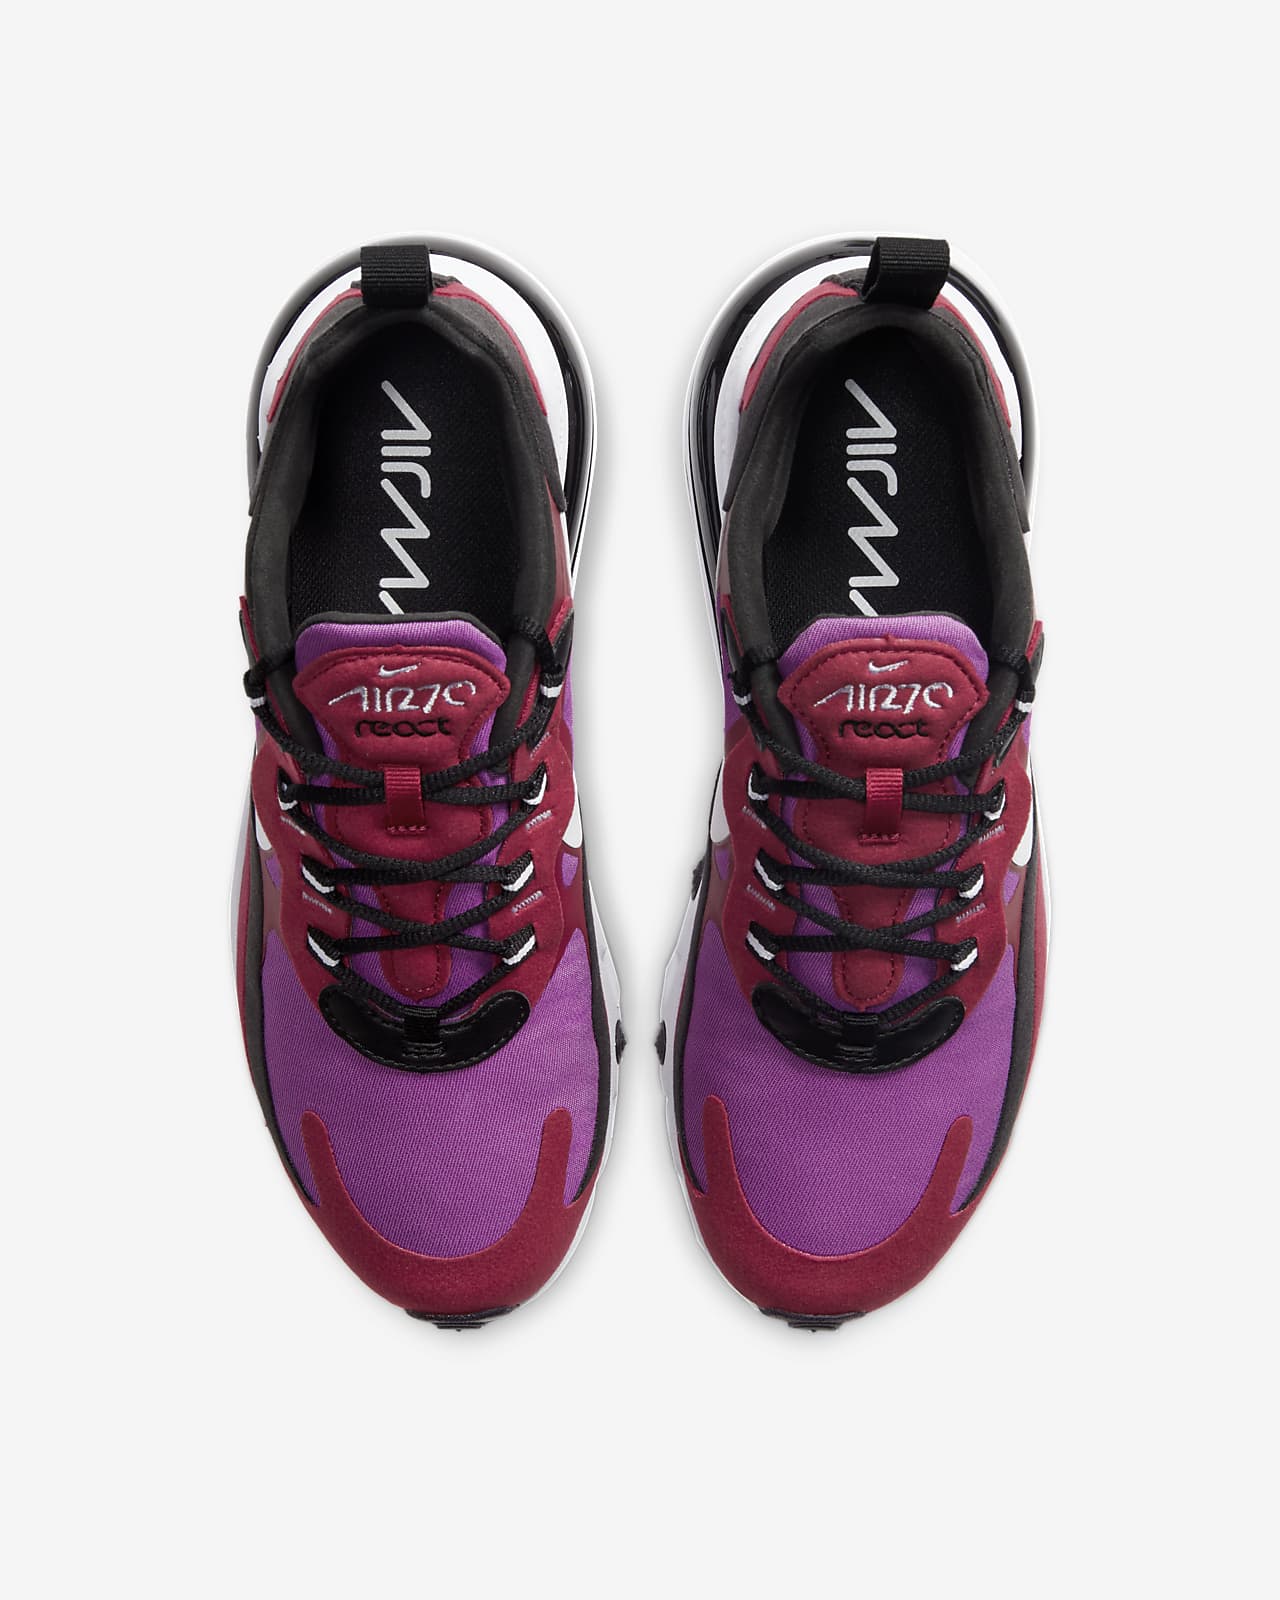 nike 270 womens purple